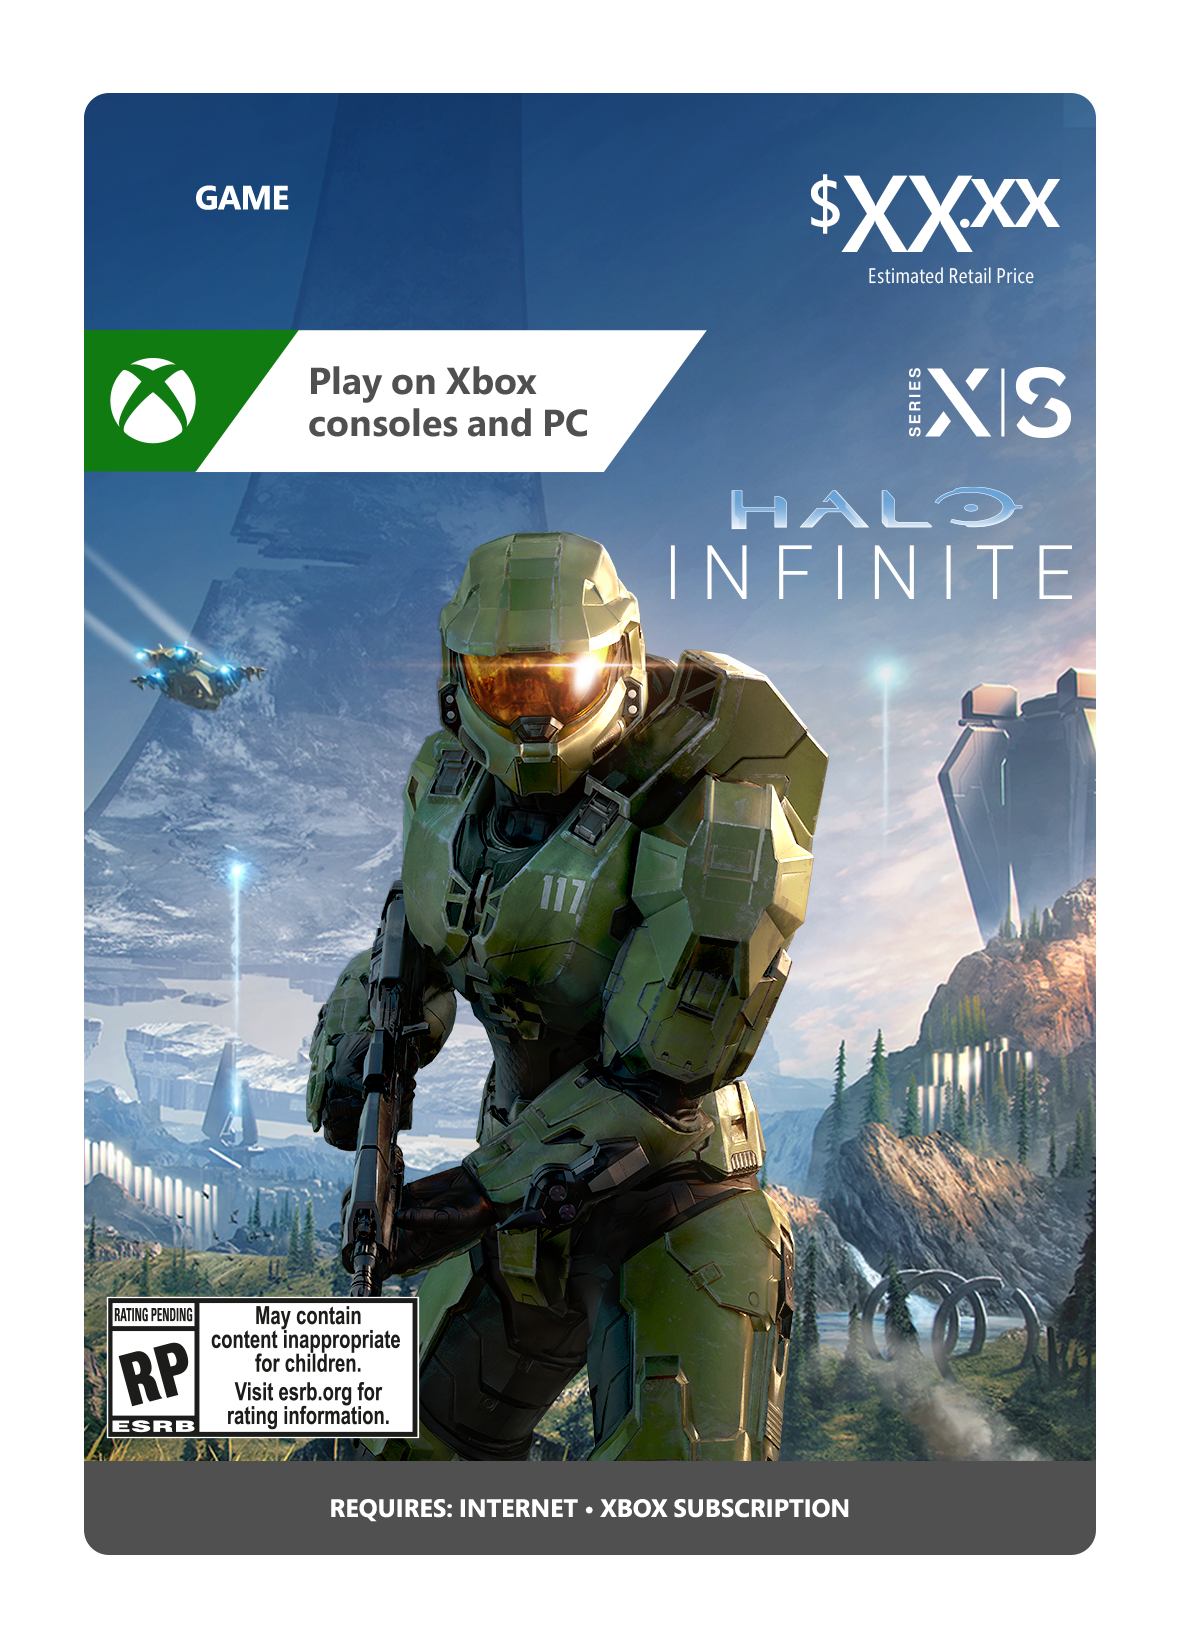 Microsoft Xbox Series X – Forza Horizon 5 Bundle, Xbox 3 Month Game Pass  Ultimate with Tigology Accessories 